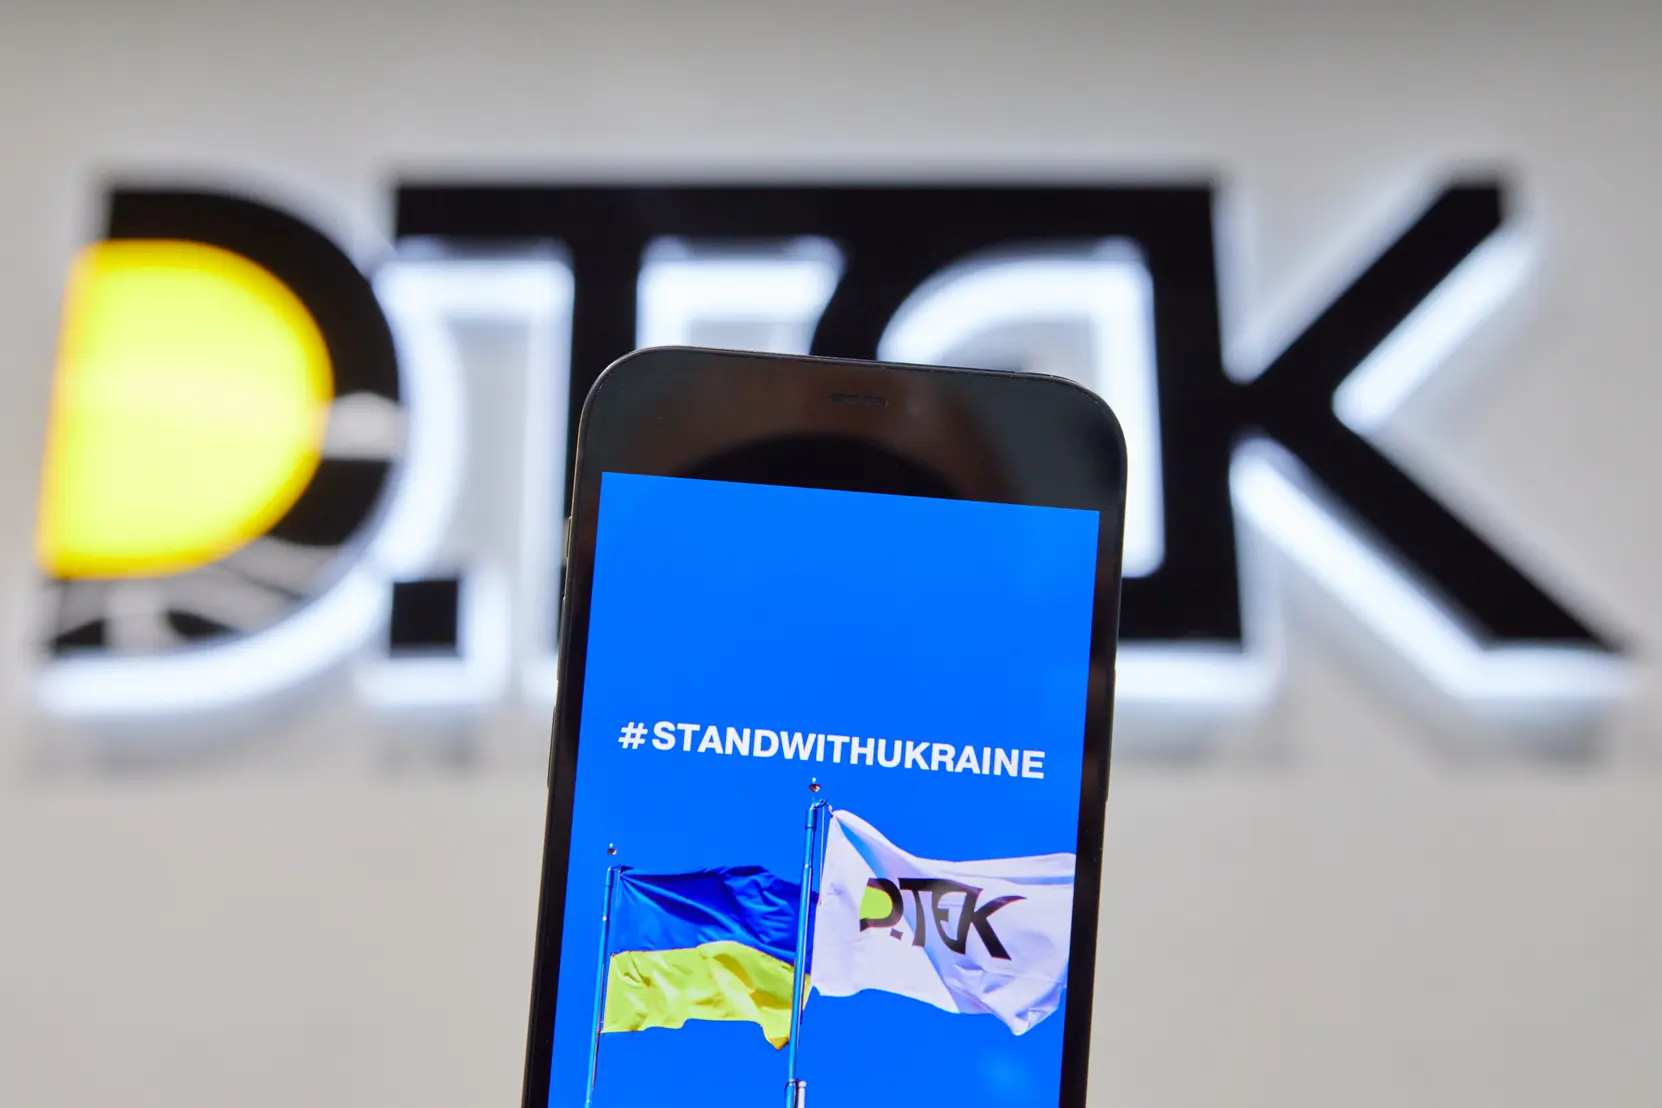 Image library / DTEK logo, #StandWithUkraine